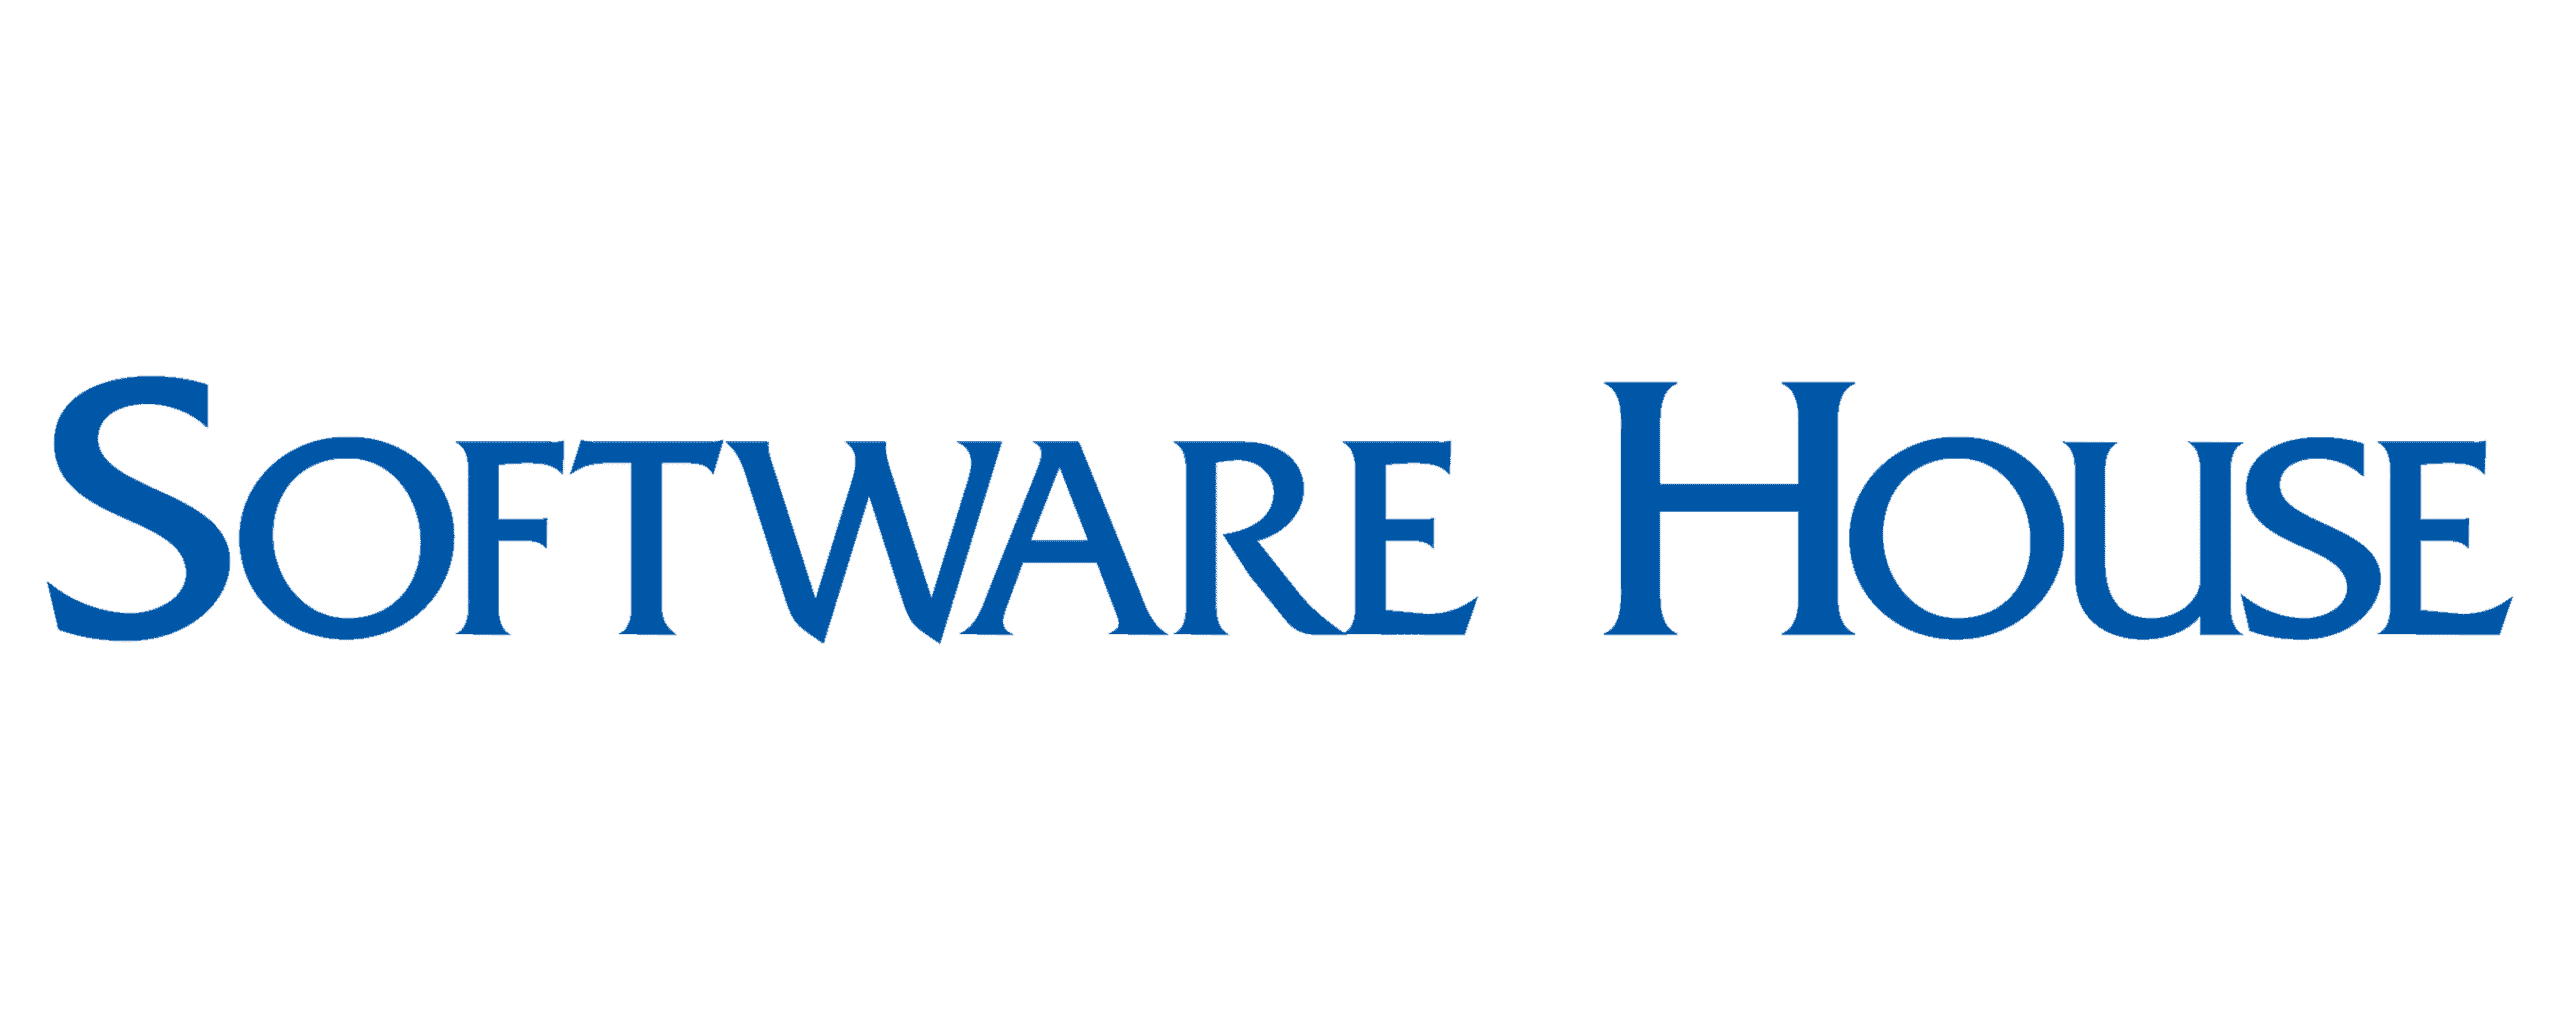 Software House Logo